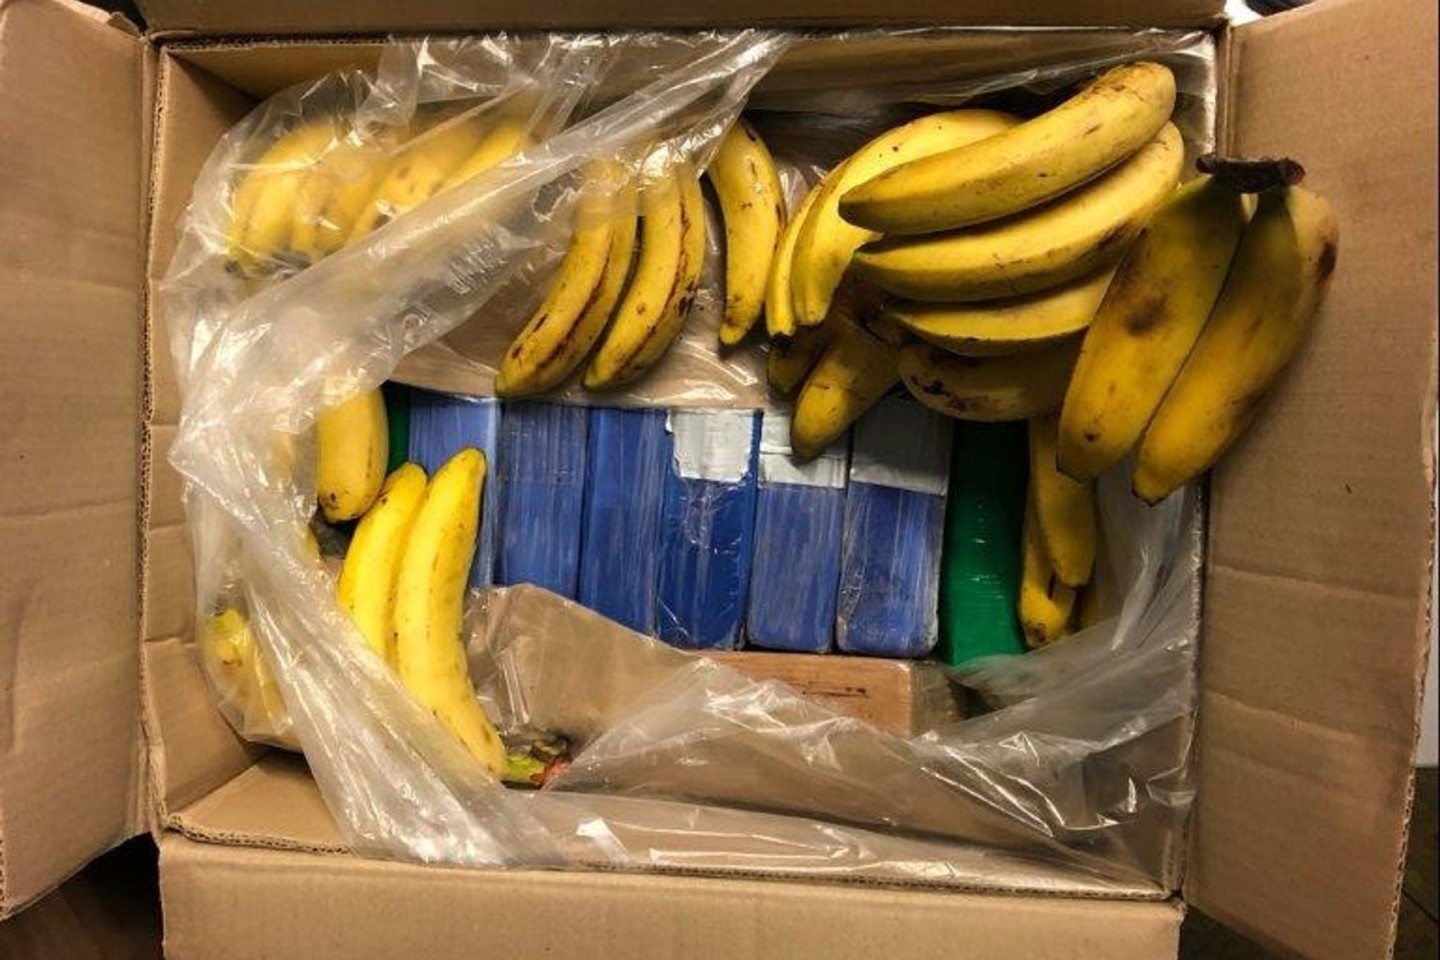 Tafel-Mitarbeiter haben in Bananenkisten Kokain gefunden.